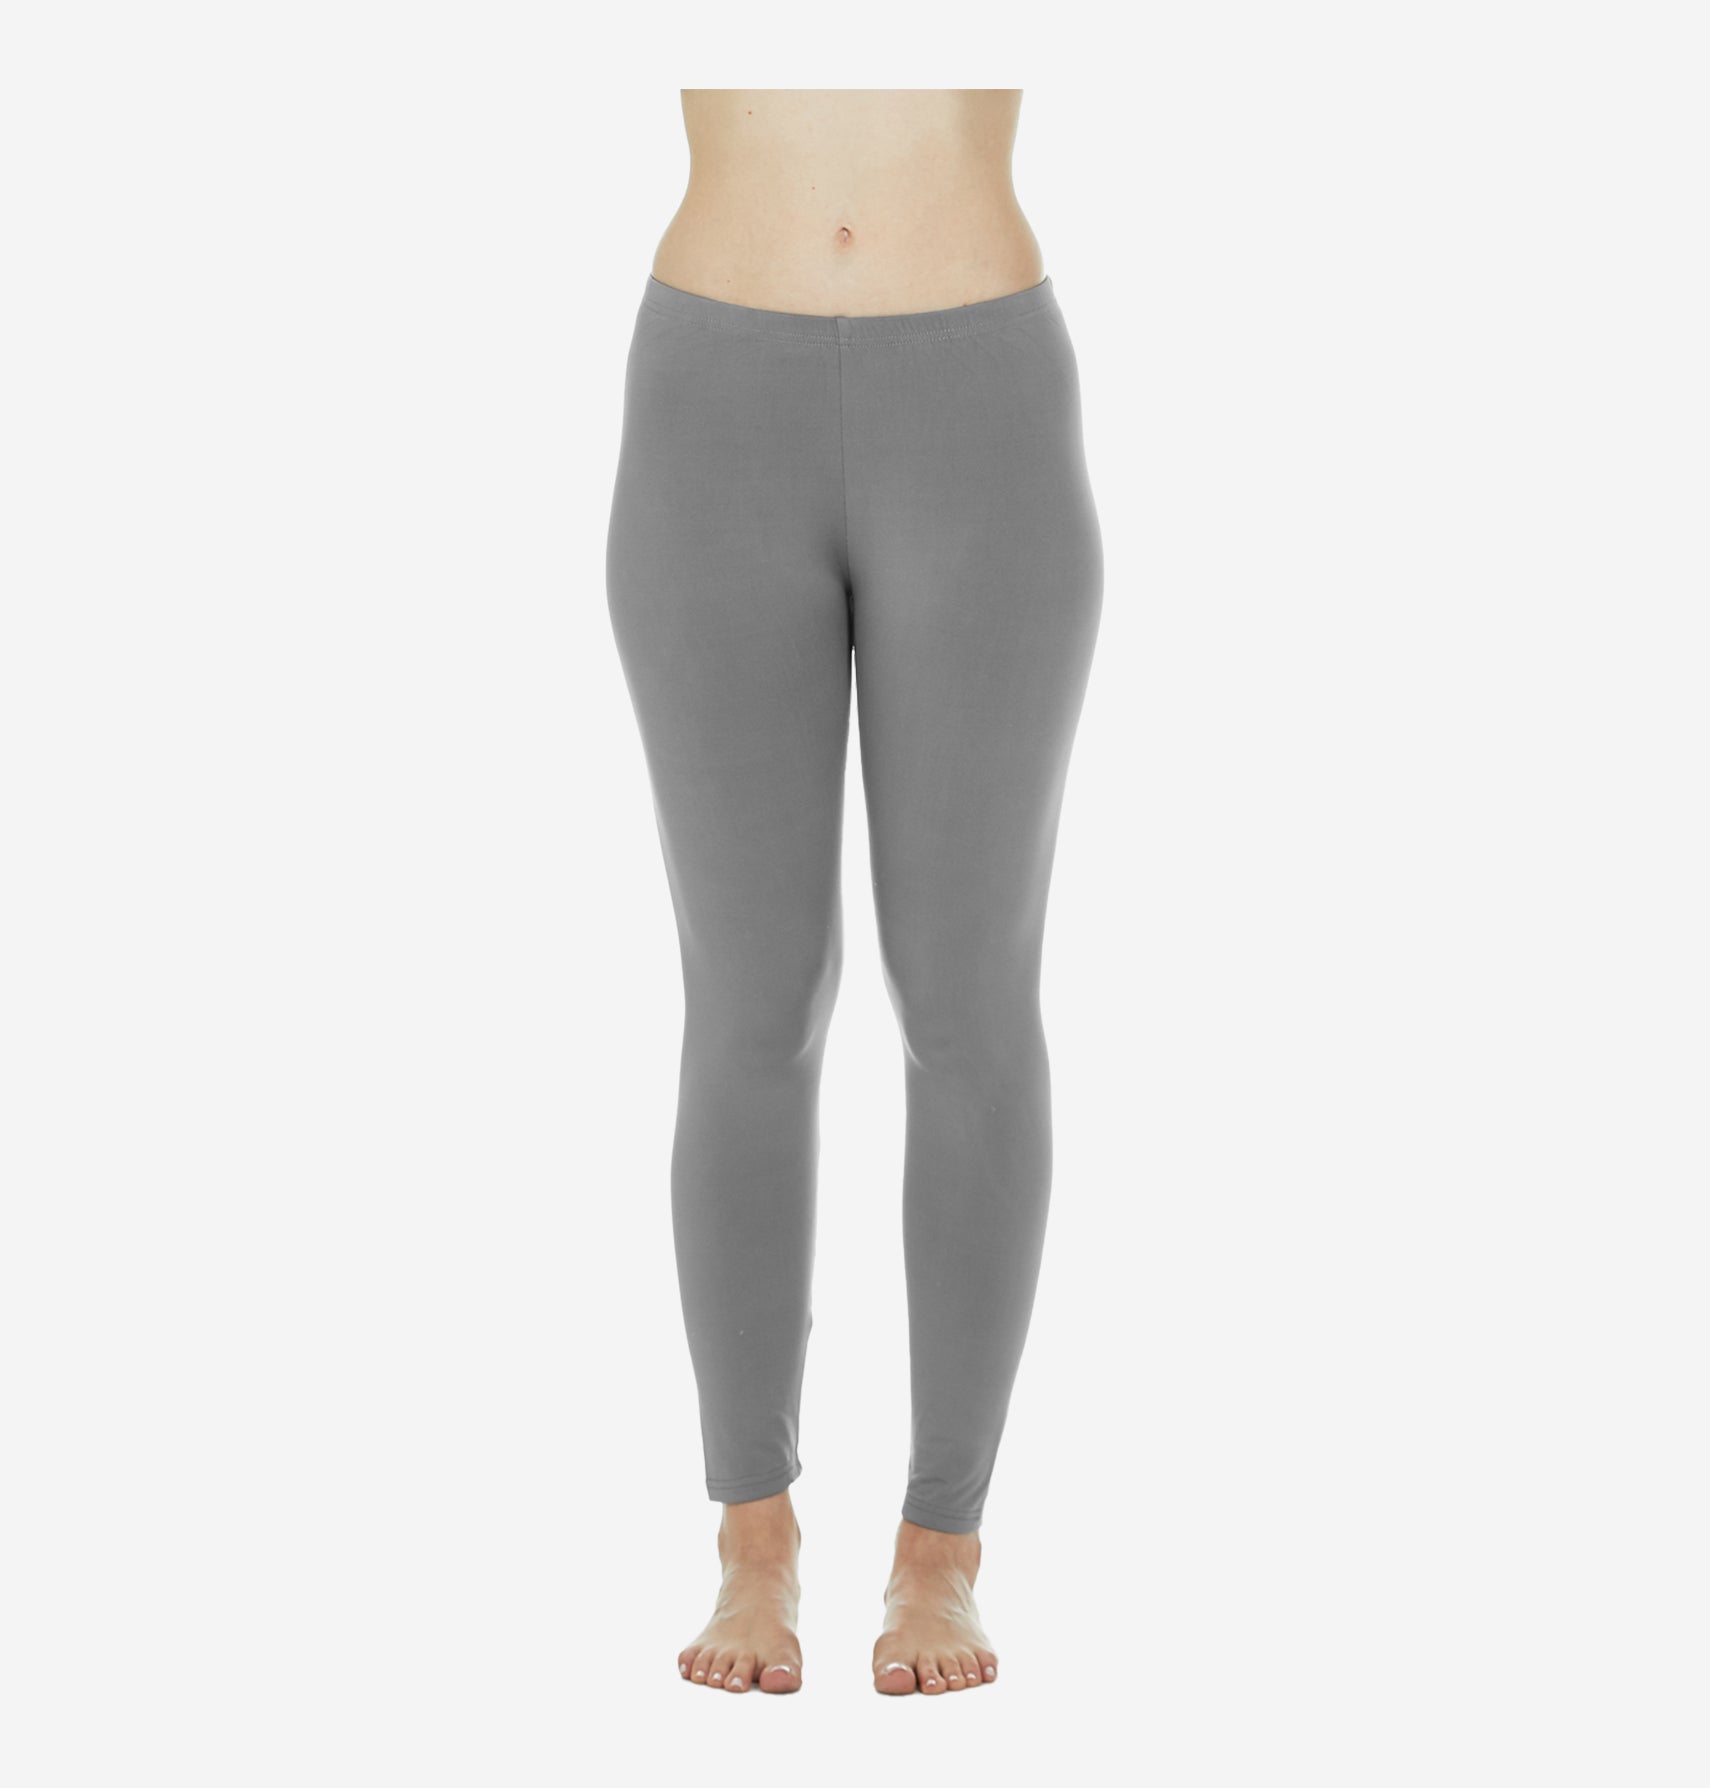 EHQJNJ Thermal Leggings Yoga Pants Plus Size Cotton Ladies' Printed Sports  Leggings Yoga Pants